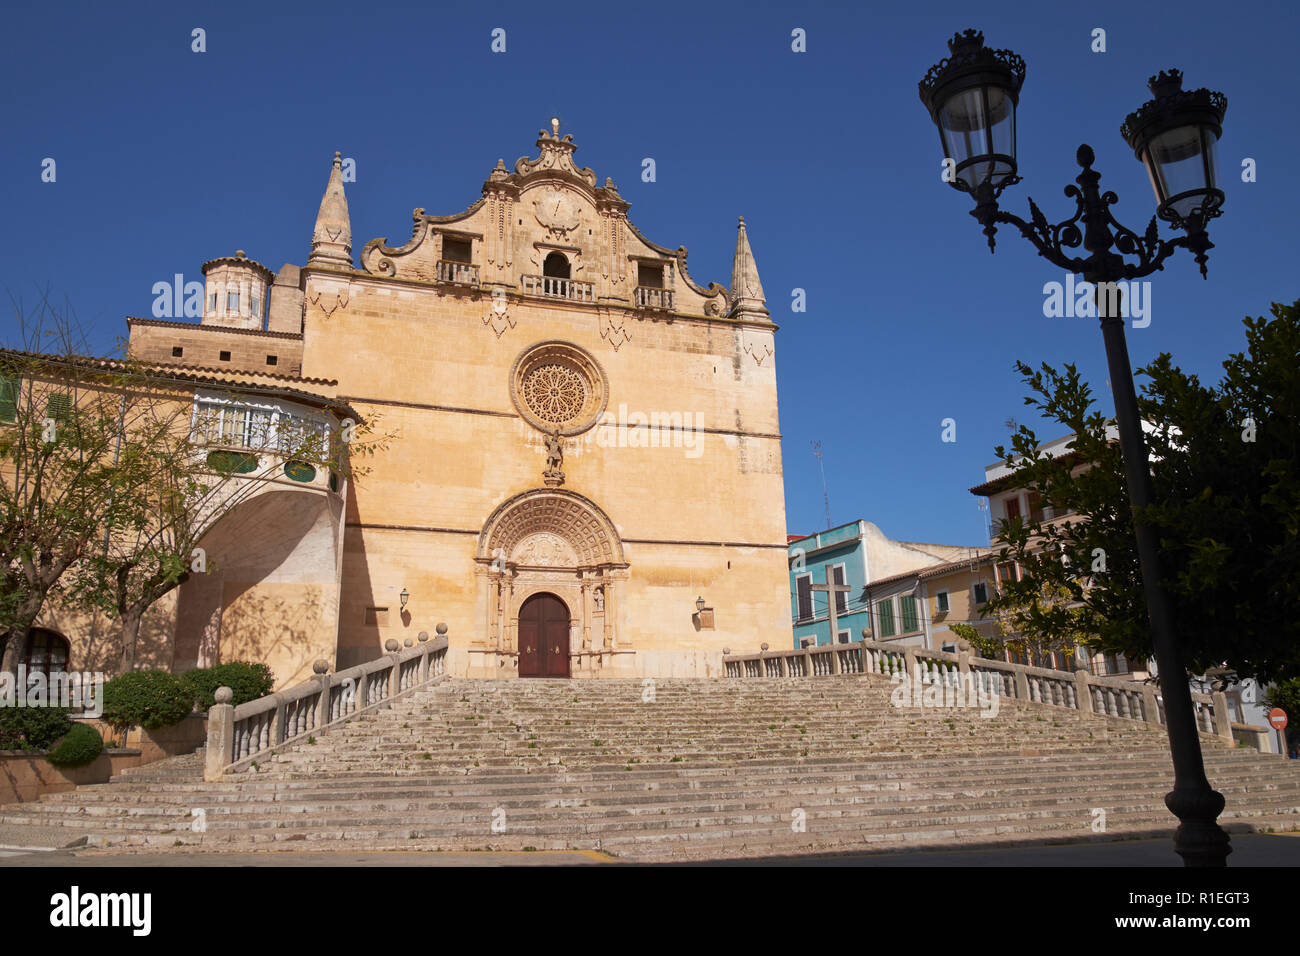 La chiesa parrocchiale di San Michele, Felantix, Maiorca, isole Baleari, Spagna. Foto Stock